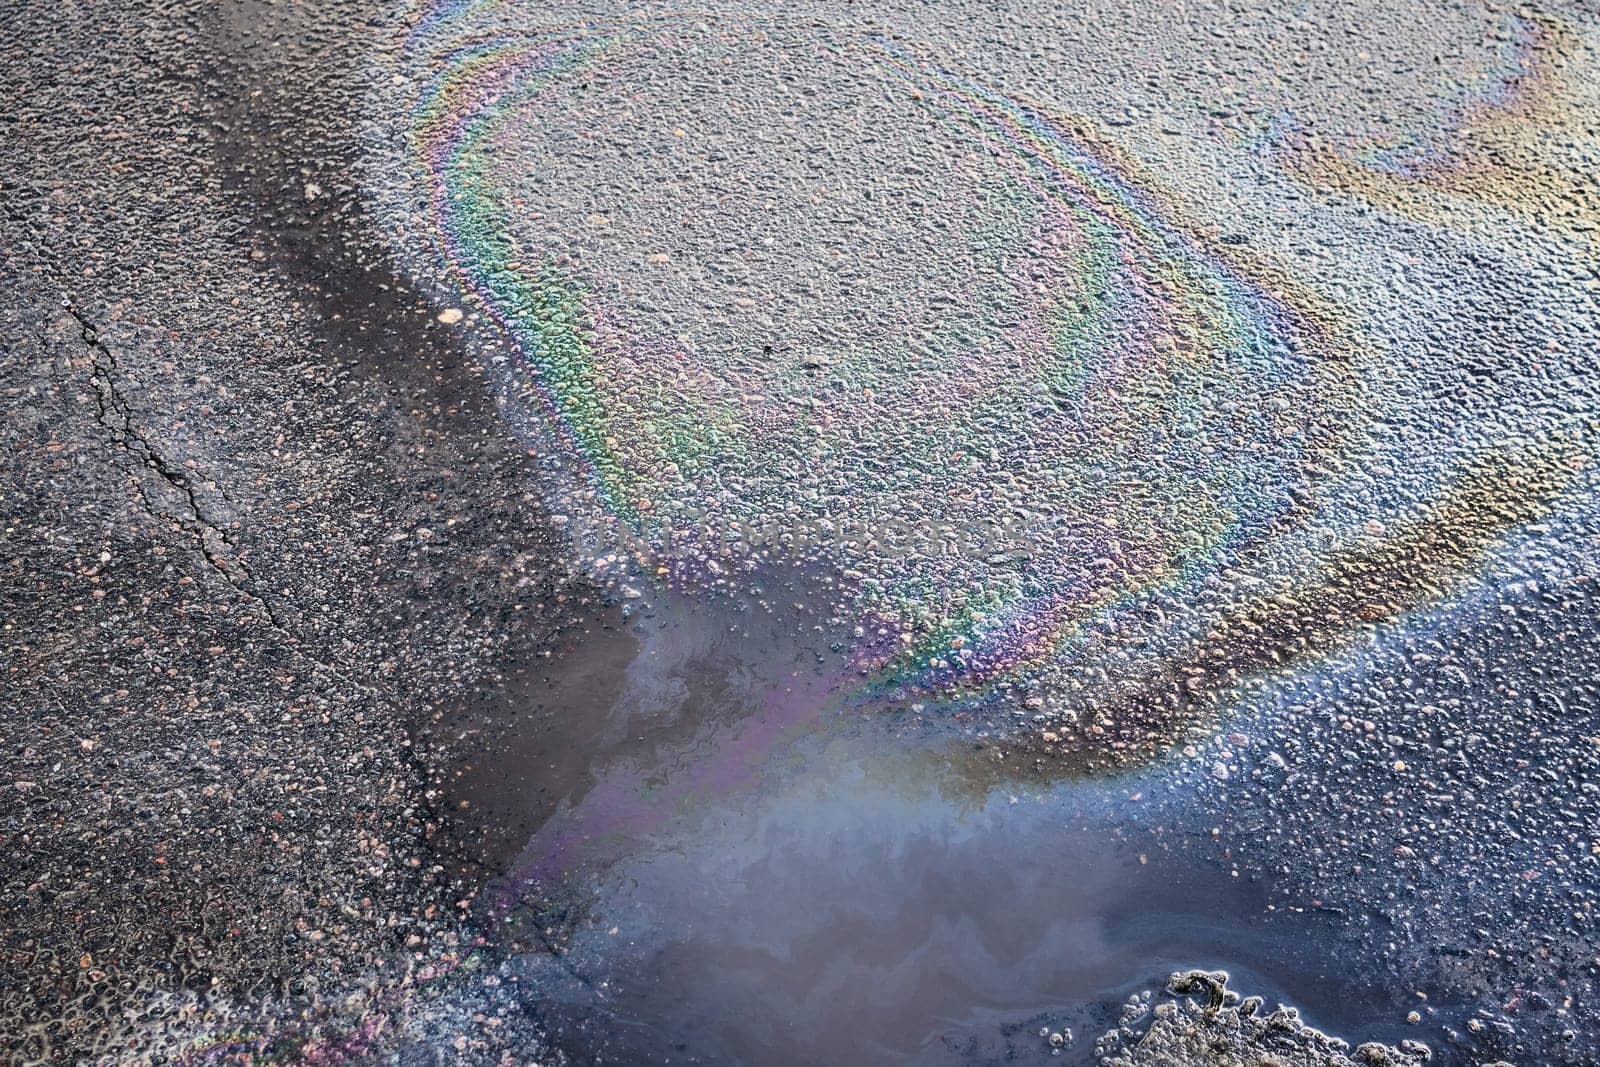 Oil stain on Asphalt, color Gasoline fuel spots on Asphalt Road as Texture or Background. by AliaksandrFilimonau